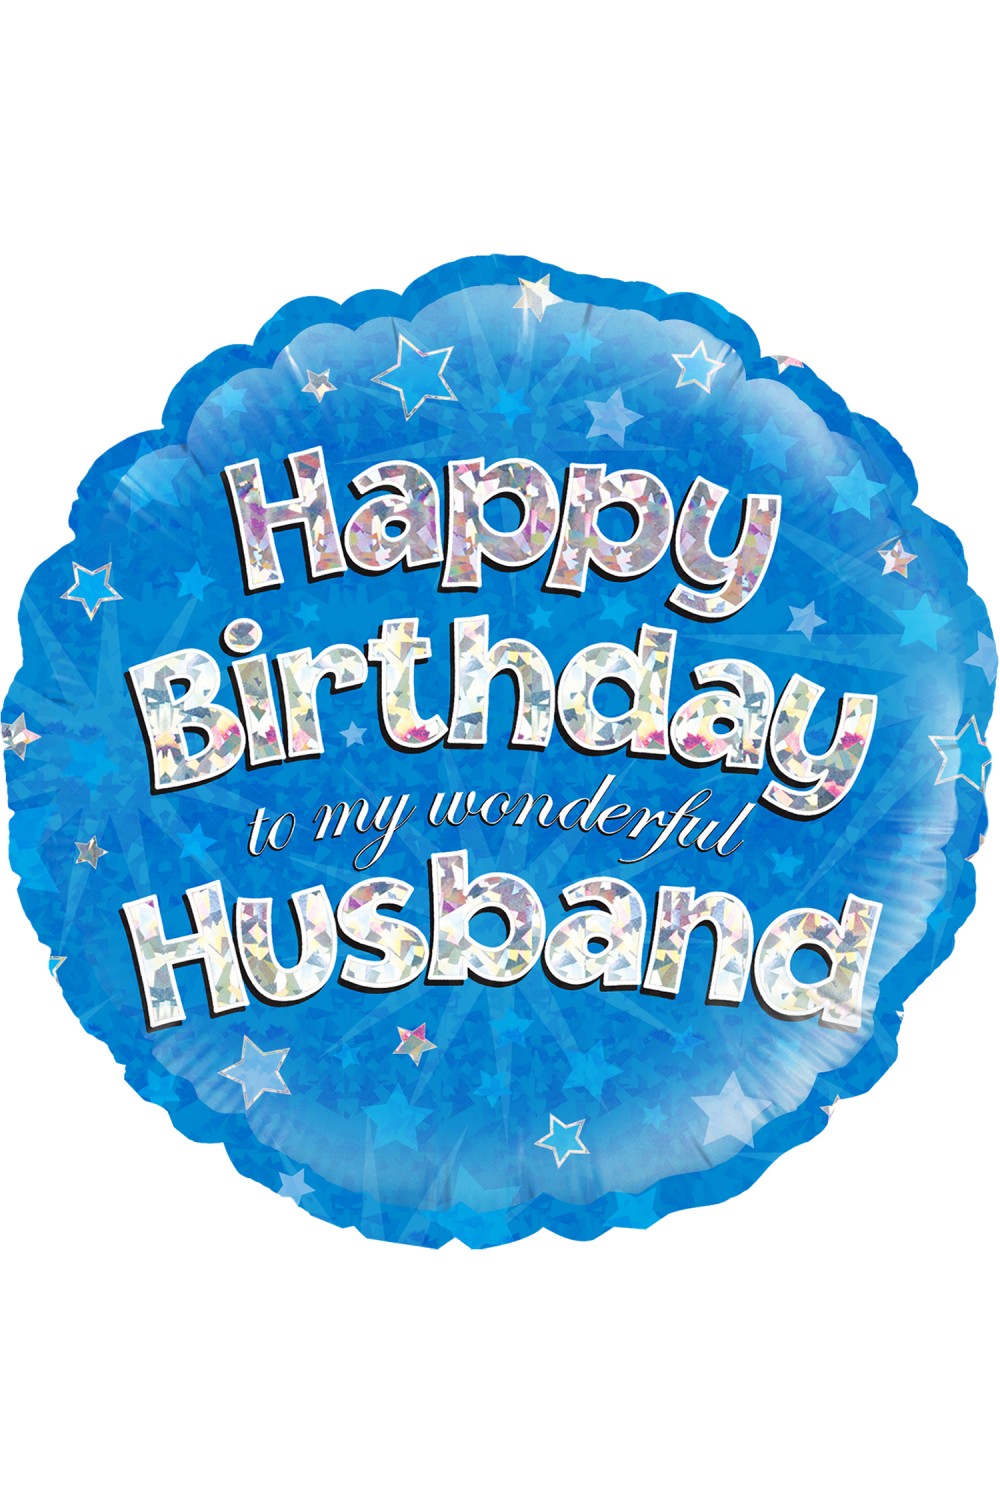 Happy Birthday Husband Balloon